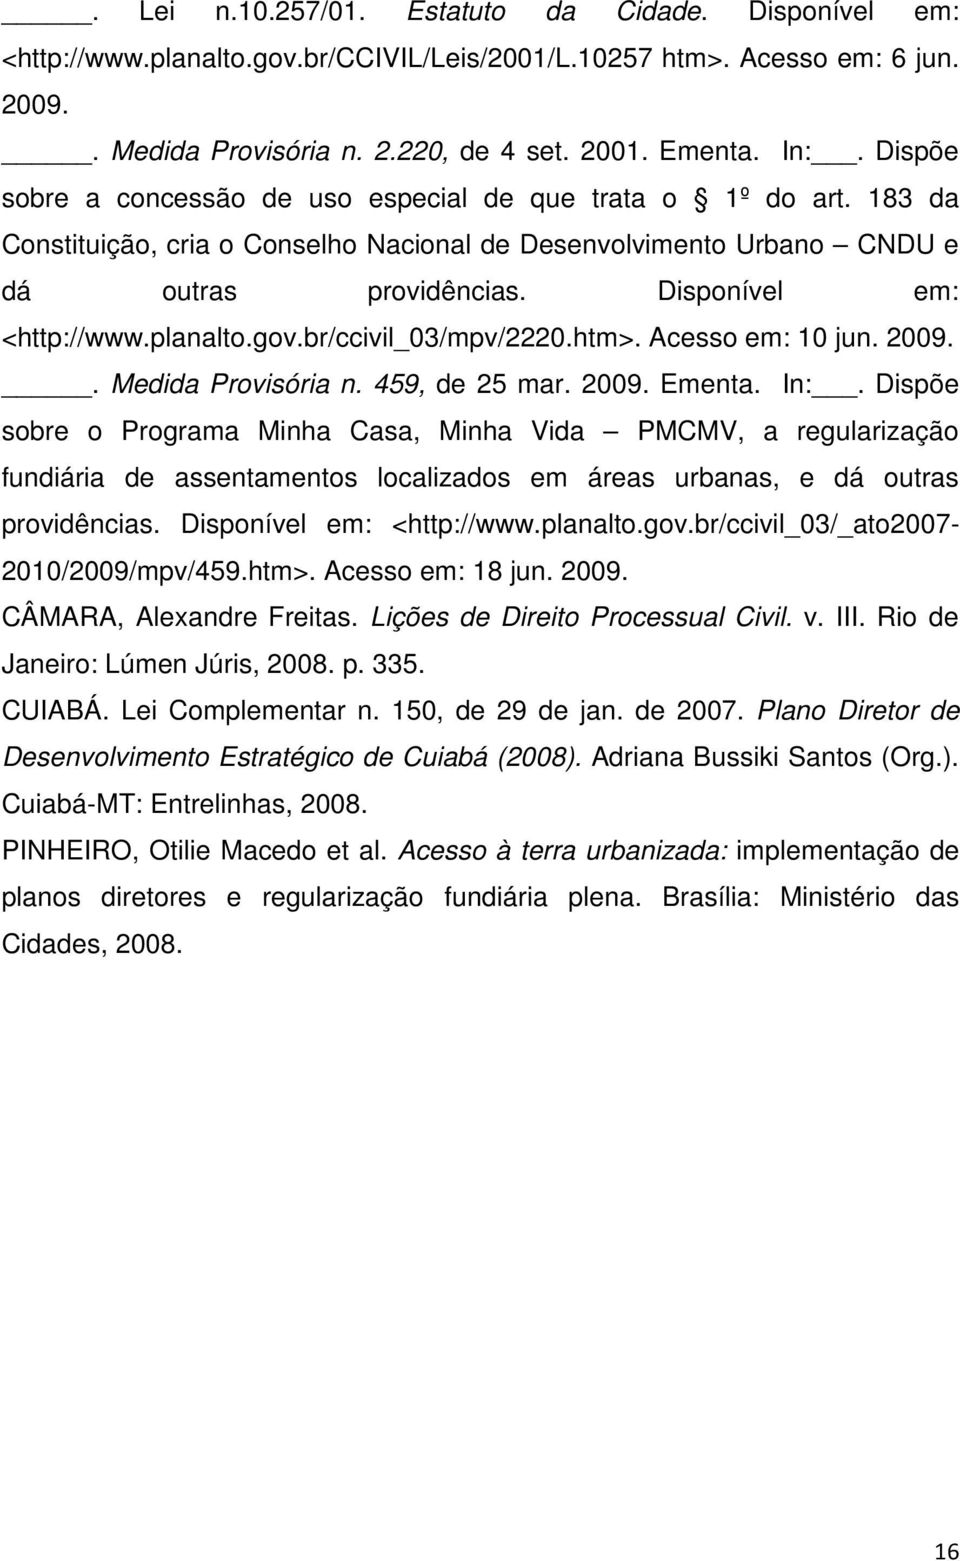 planalto.gov.br/ccivil_03/mpv/2220.htm>. Acesso em: 10 jun. 2009.. Medida Provisória n. 459, de 25 mar. 2009. Ementa. In:.